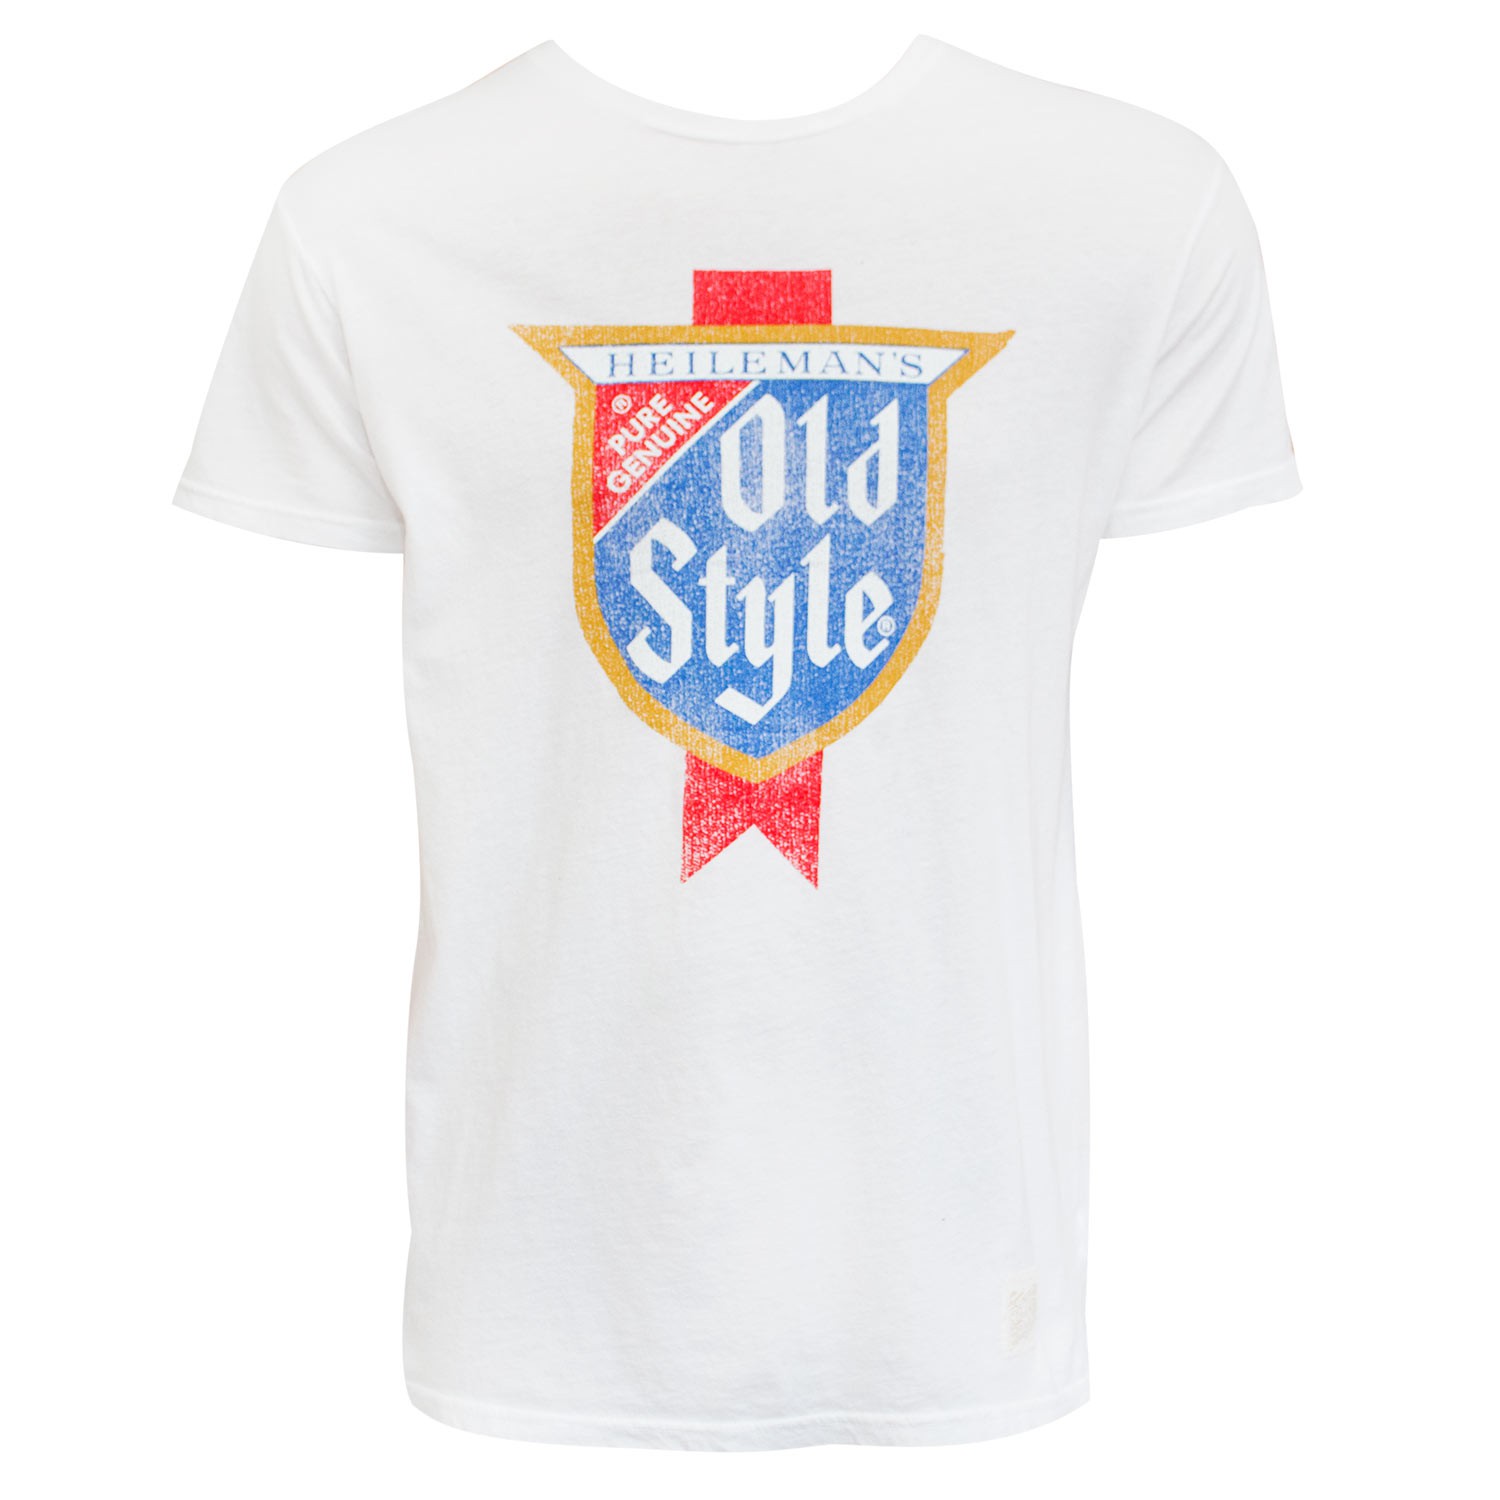 Old Style Retro Brand White Tee Shirt